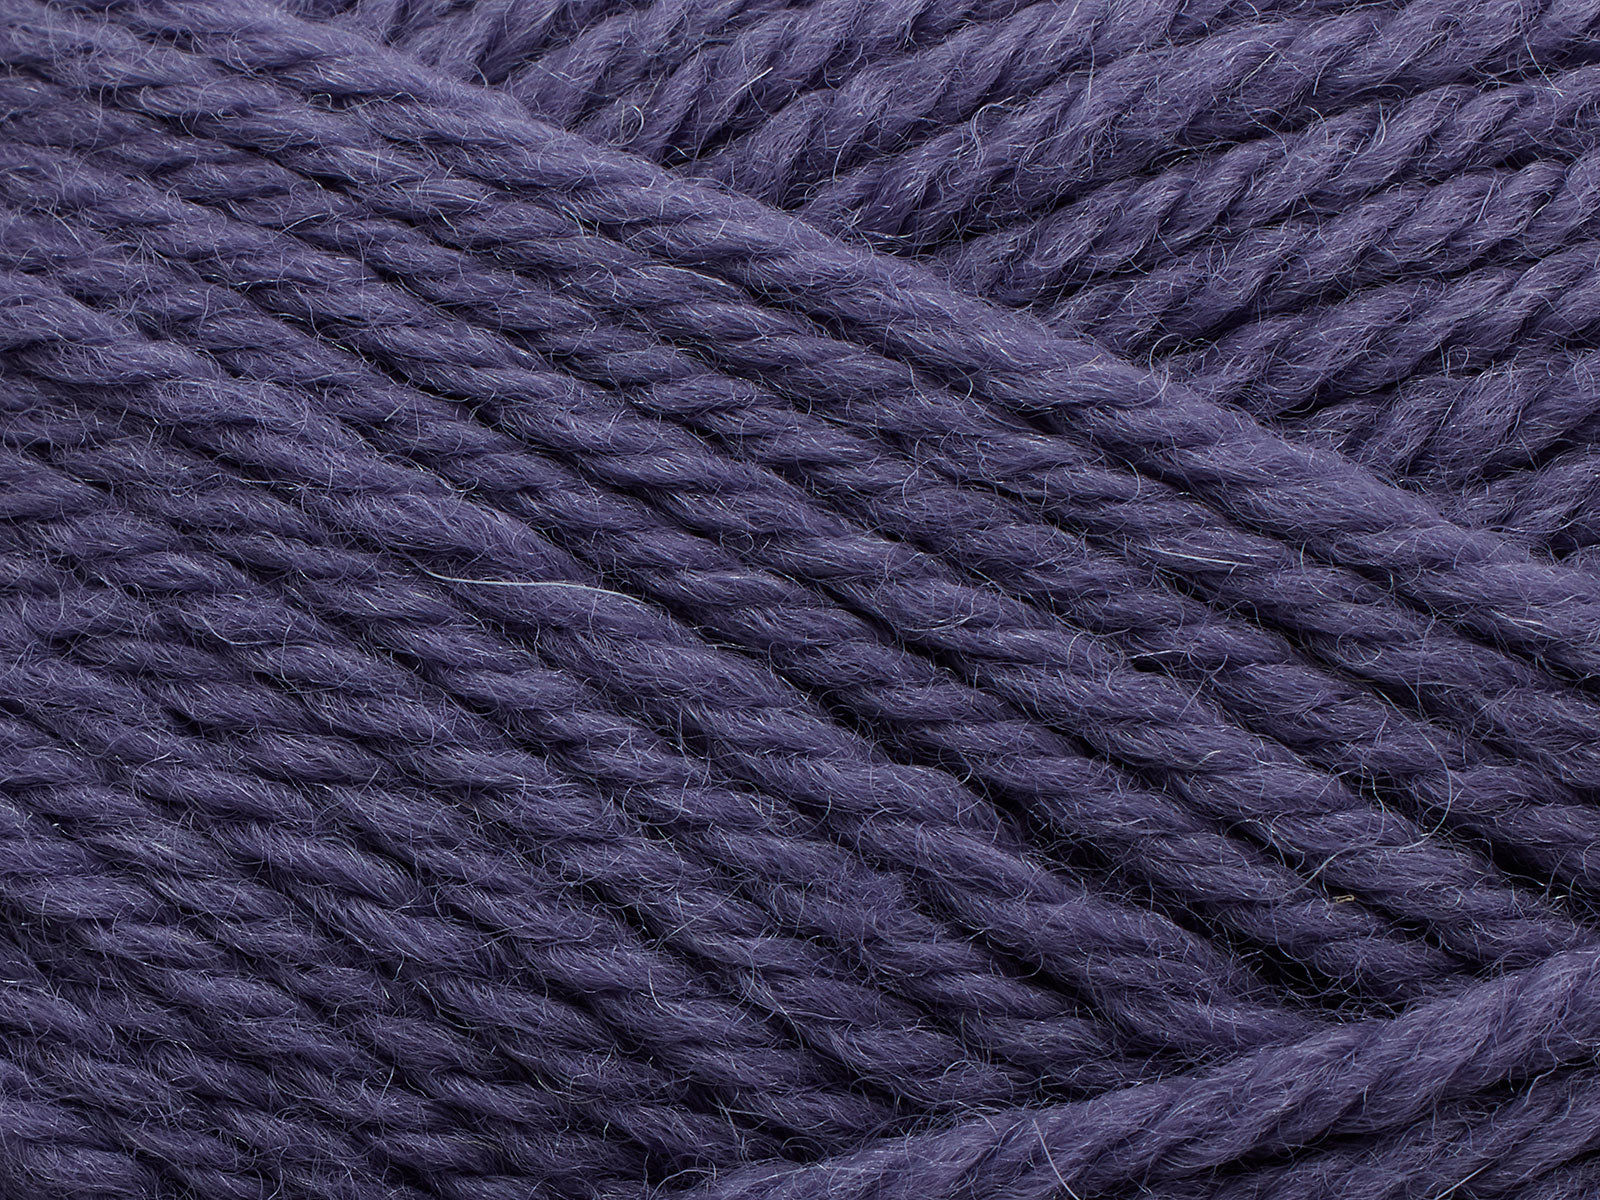 Peruvian Highland Wool fra Filcolana.